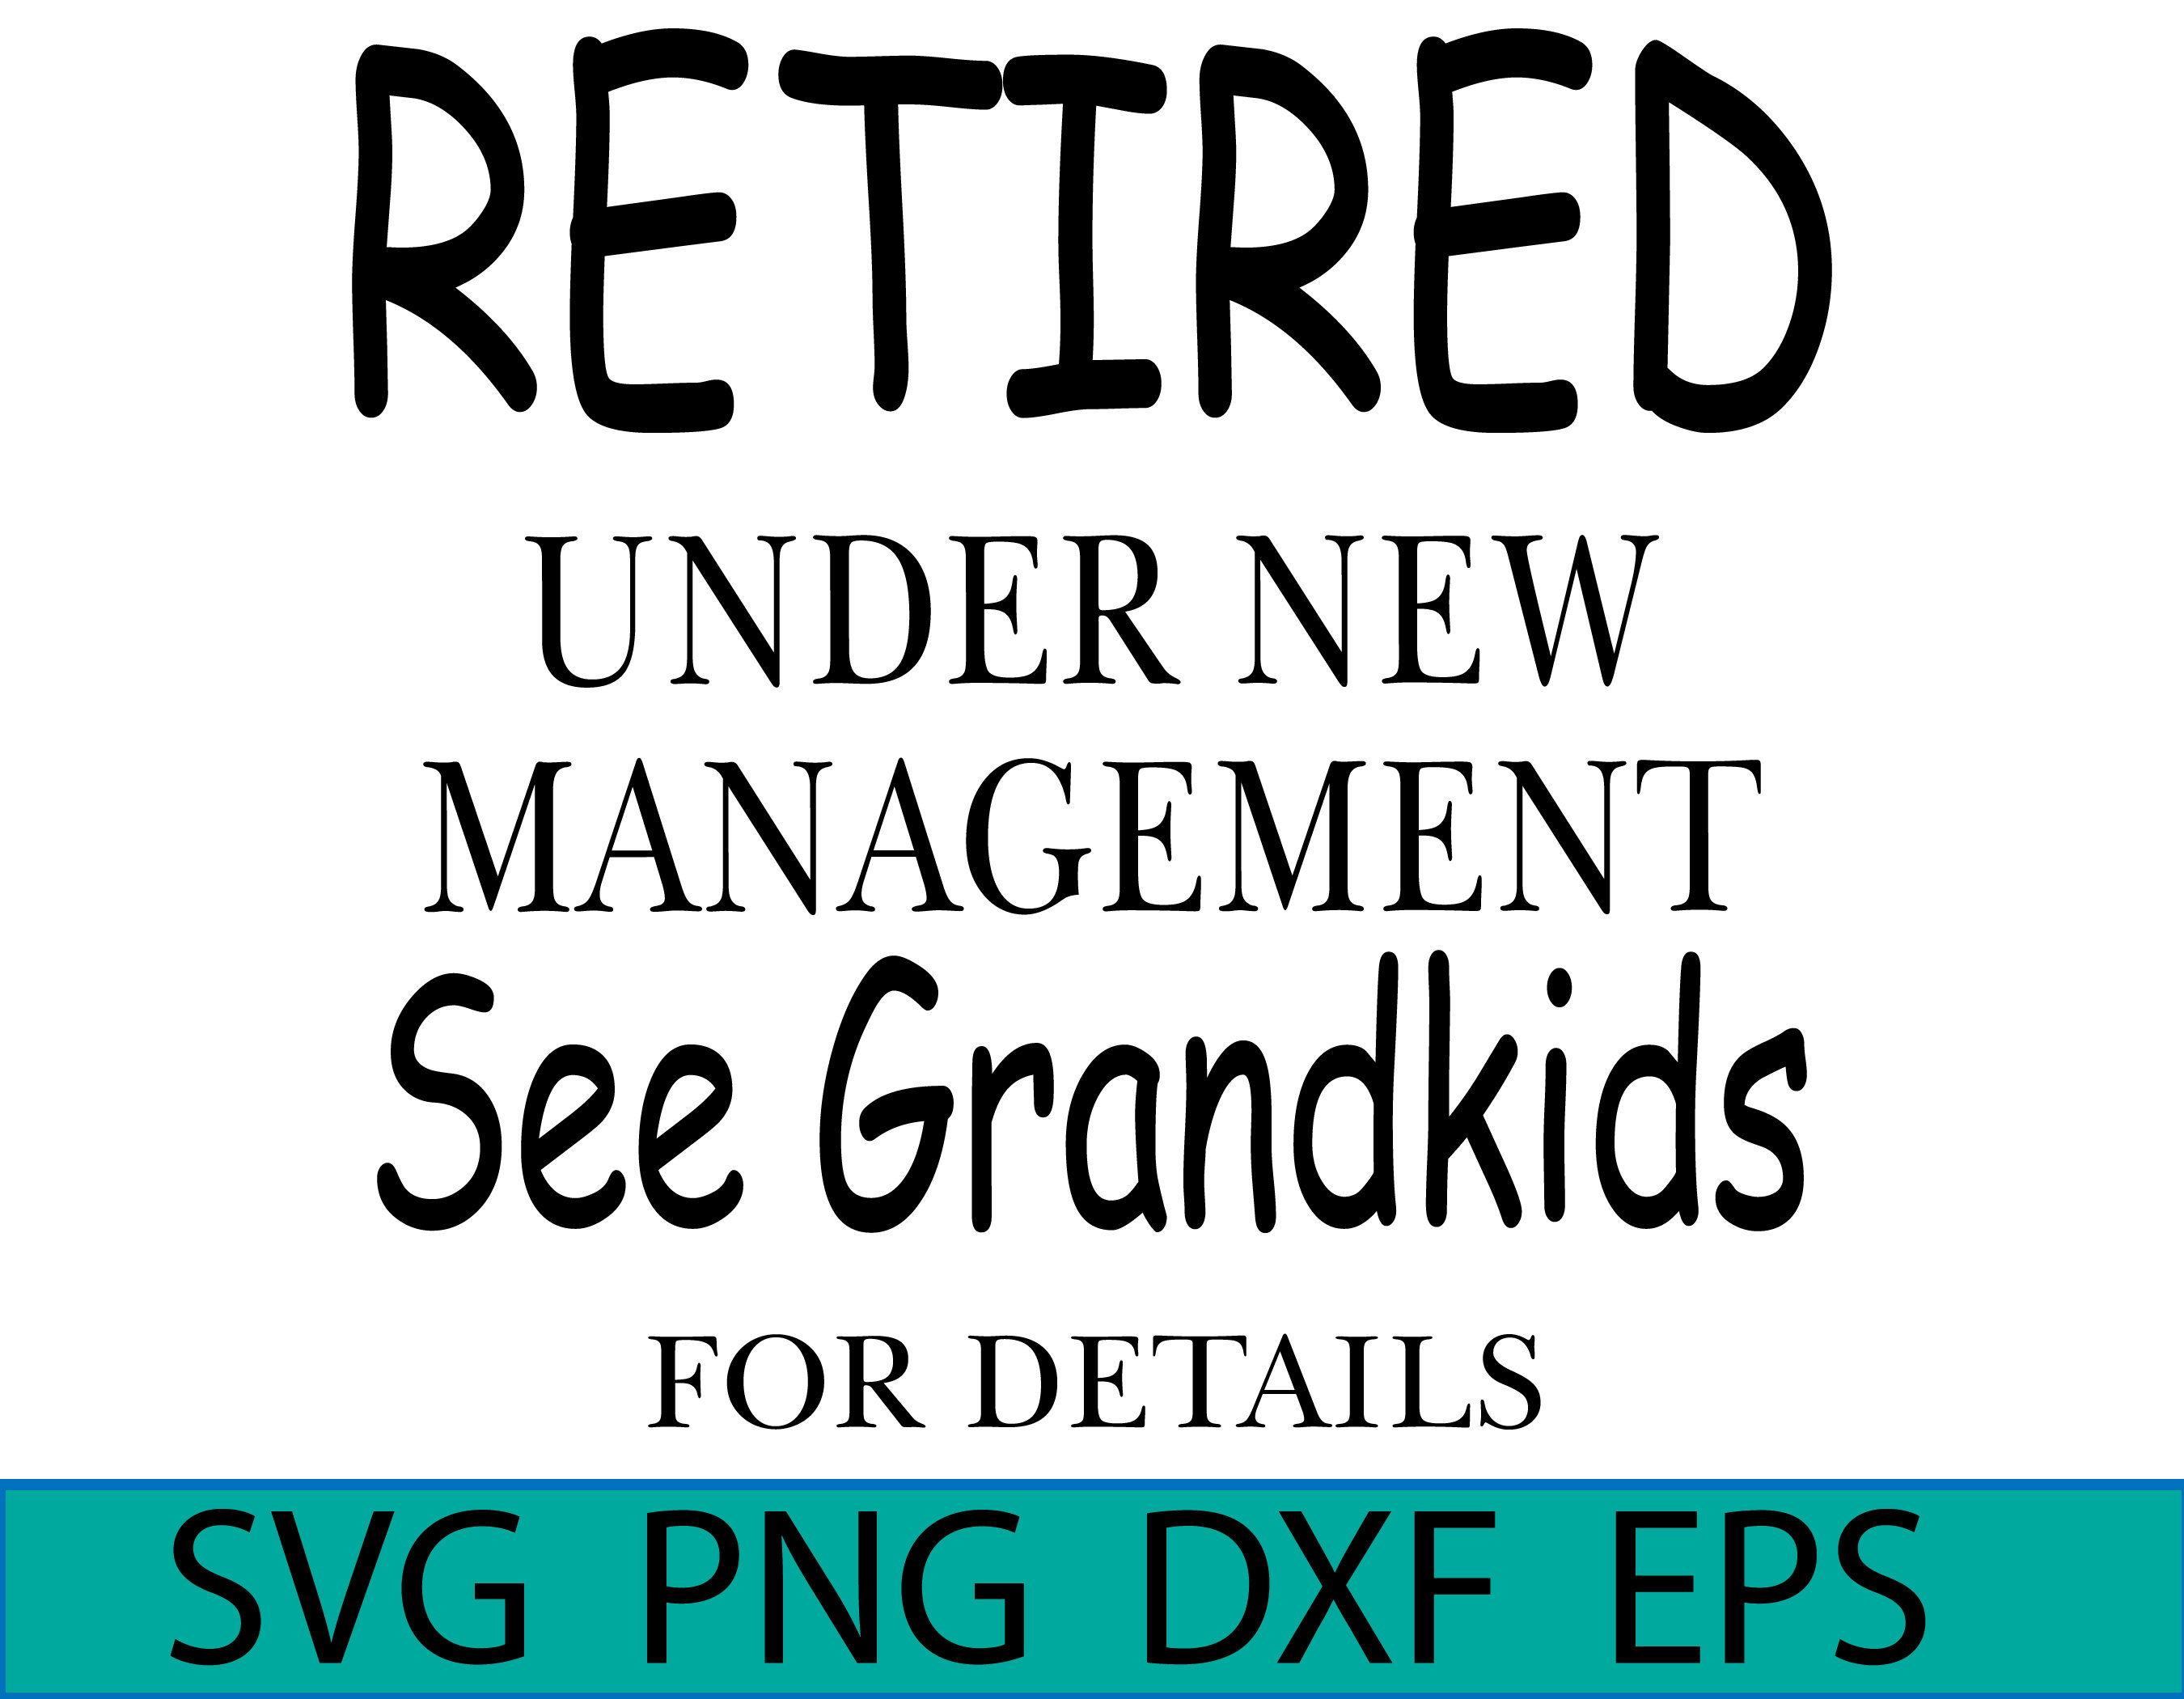 Retirement under new management 